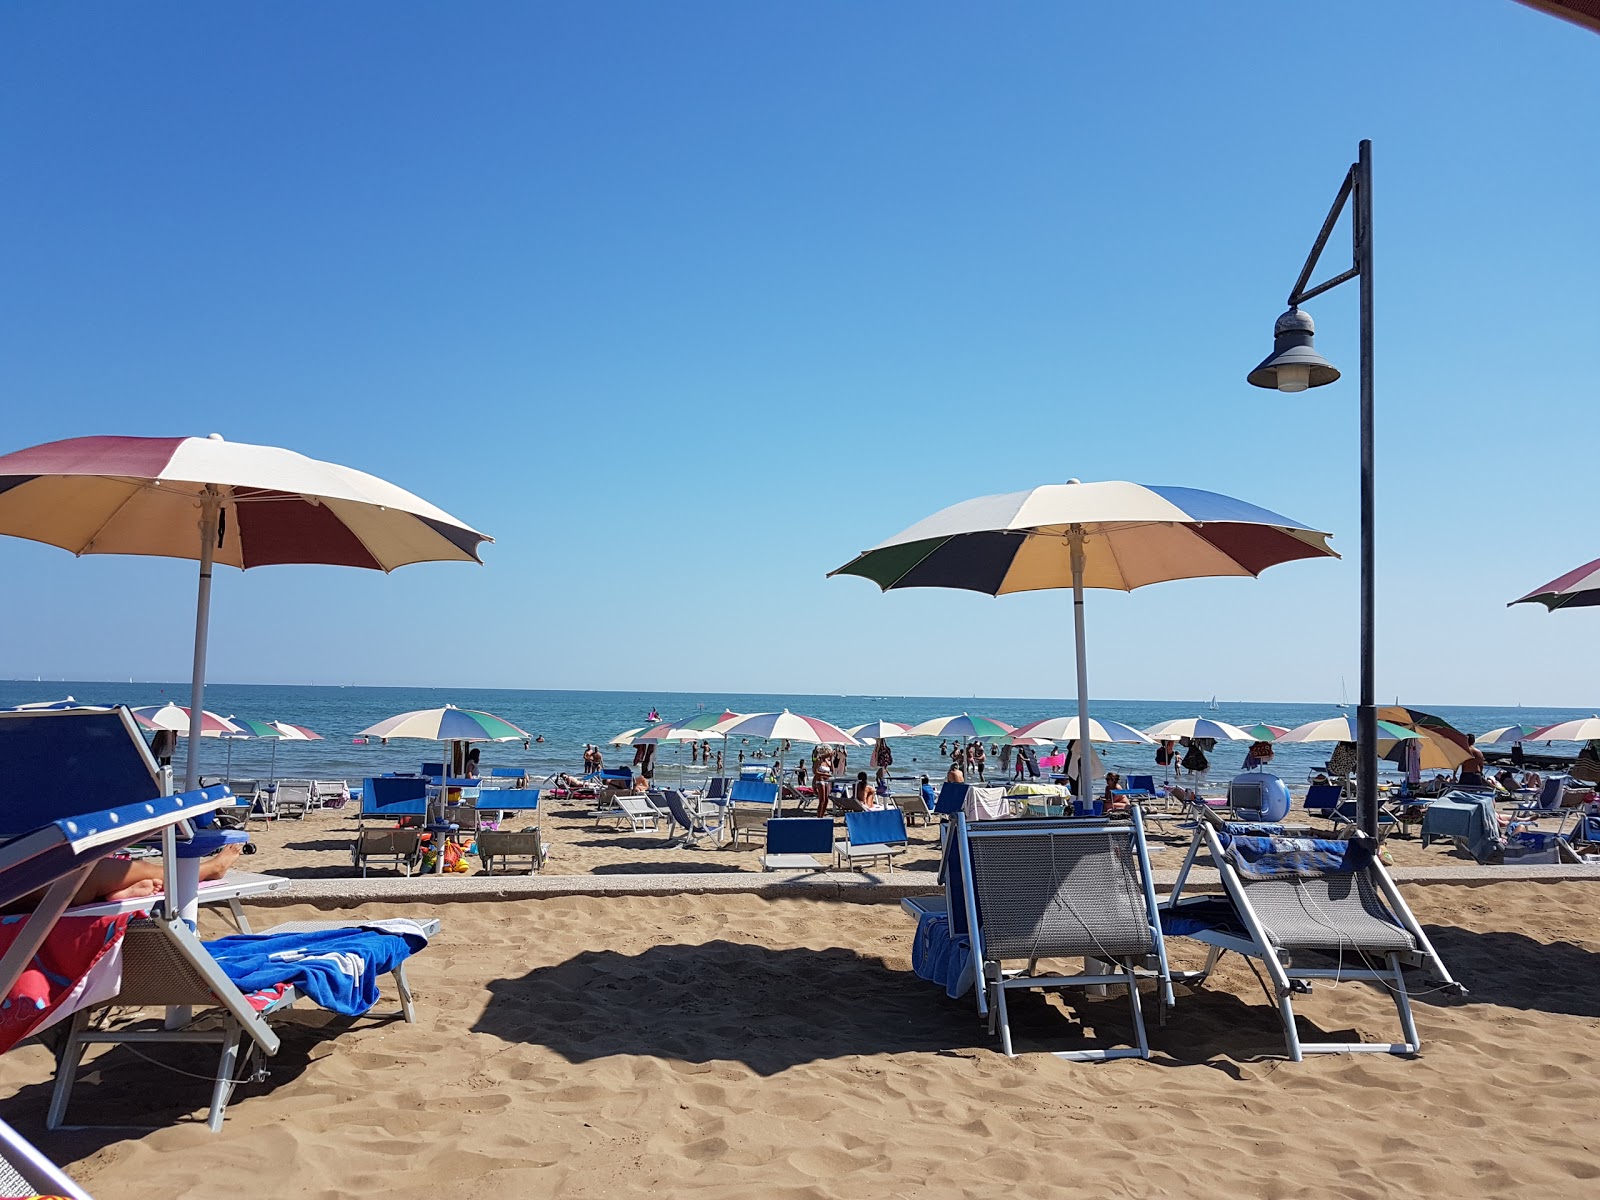 Spiaggia Libera Caorle的照片 带有碧绿色纯水表面